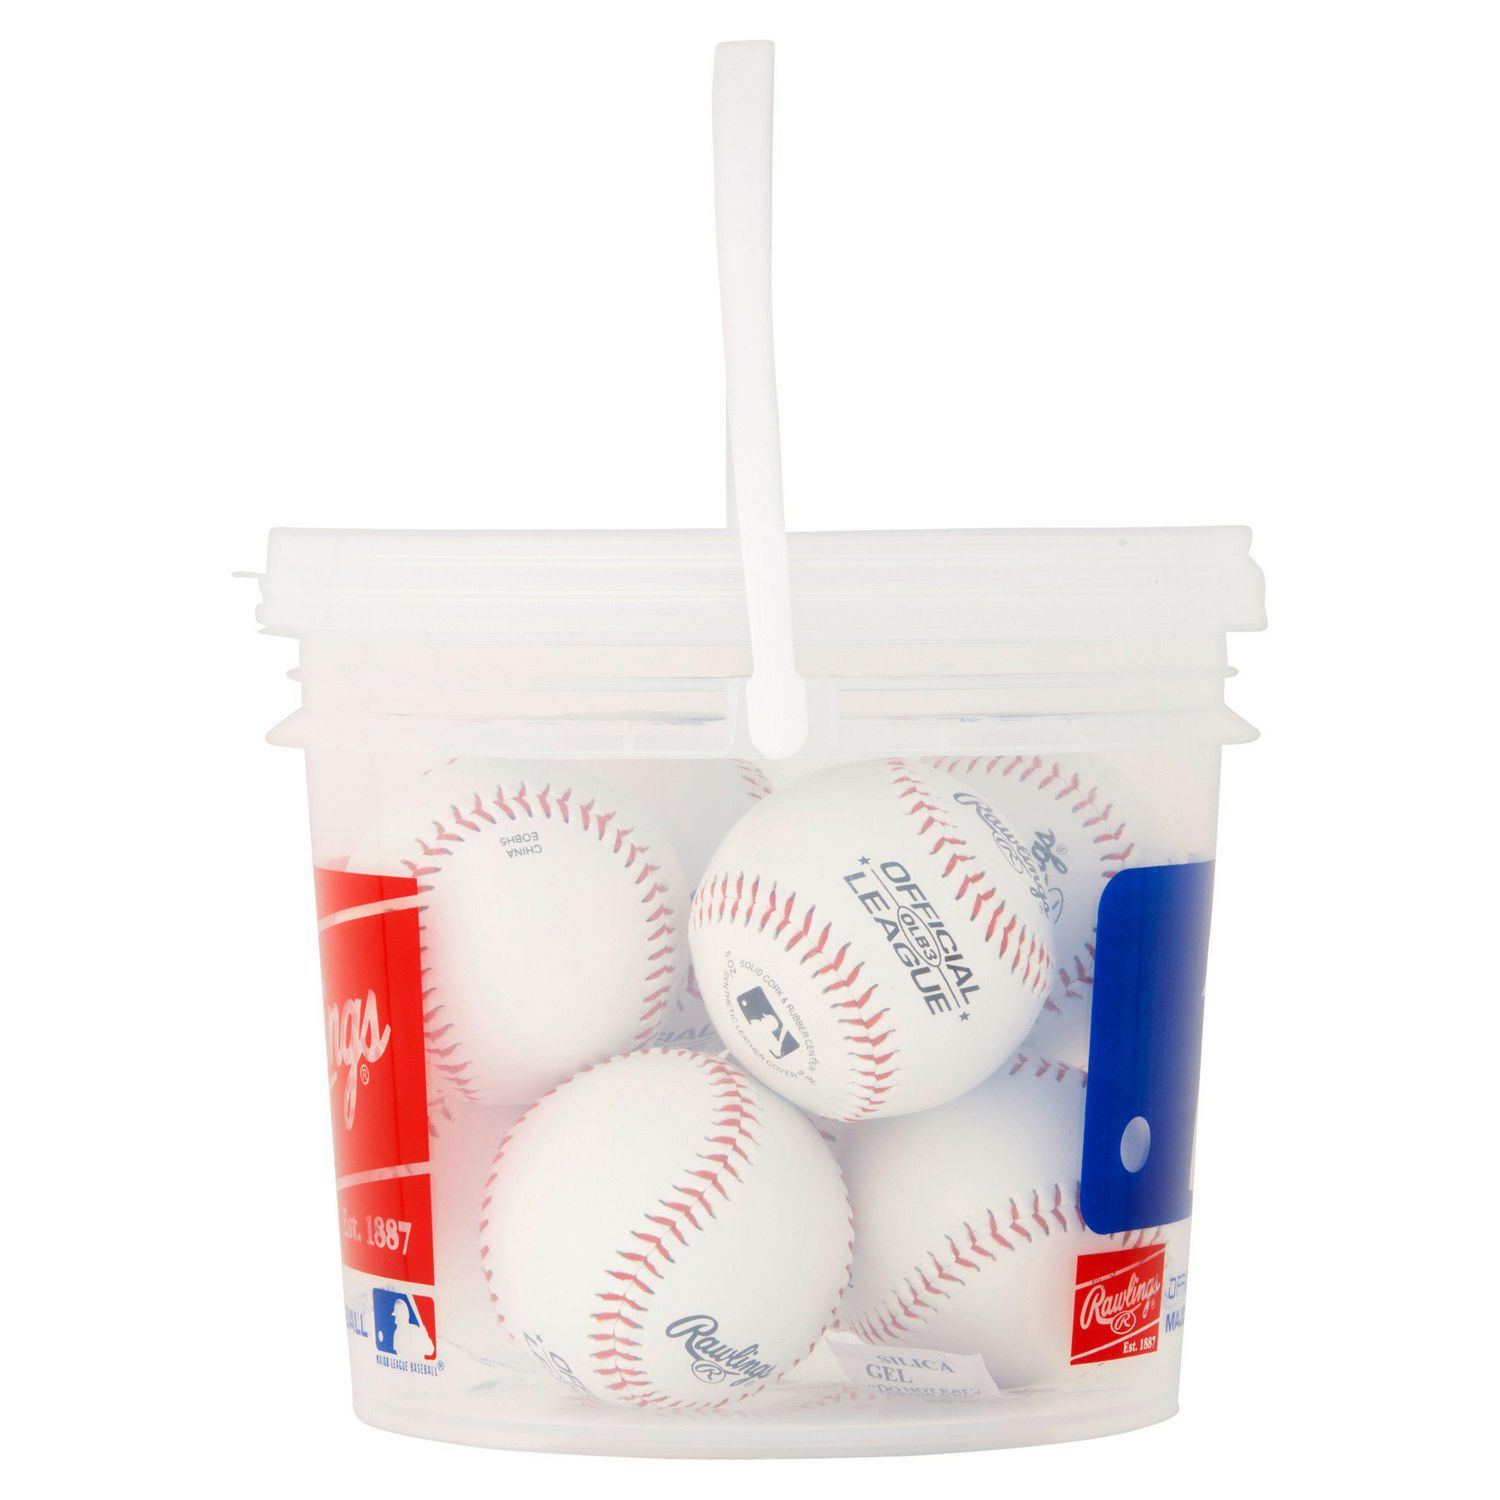 Rawlings Official League Recreational Grade Baseballs, Bucket of 8